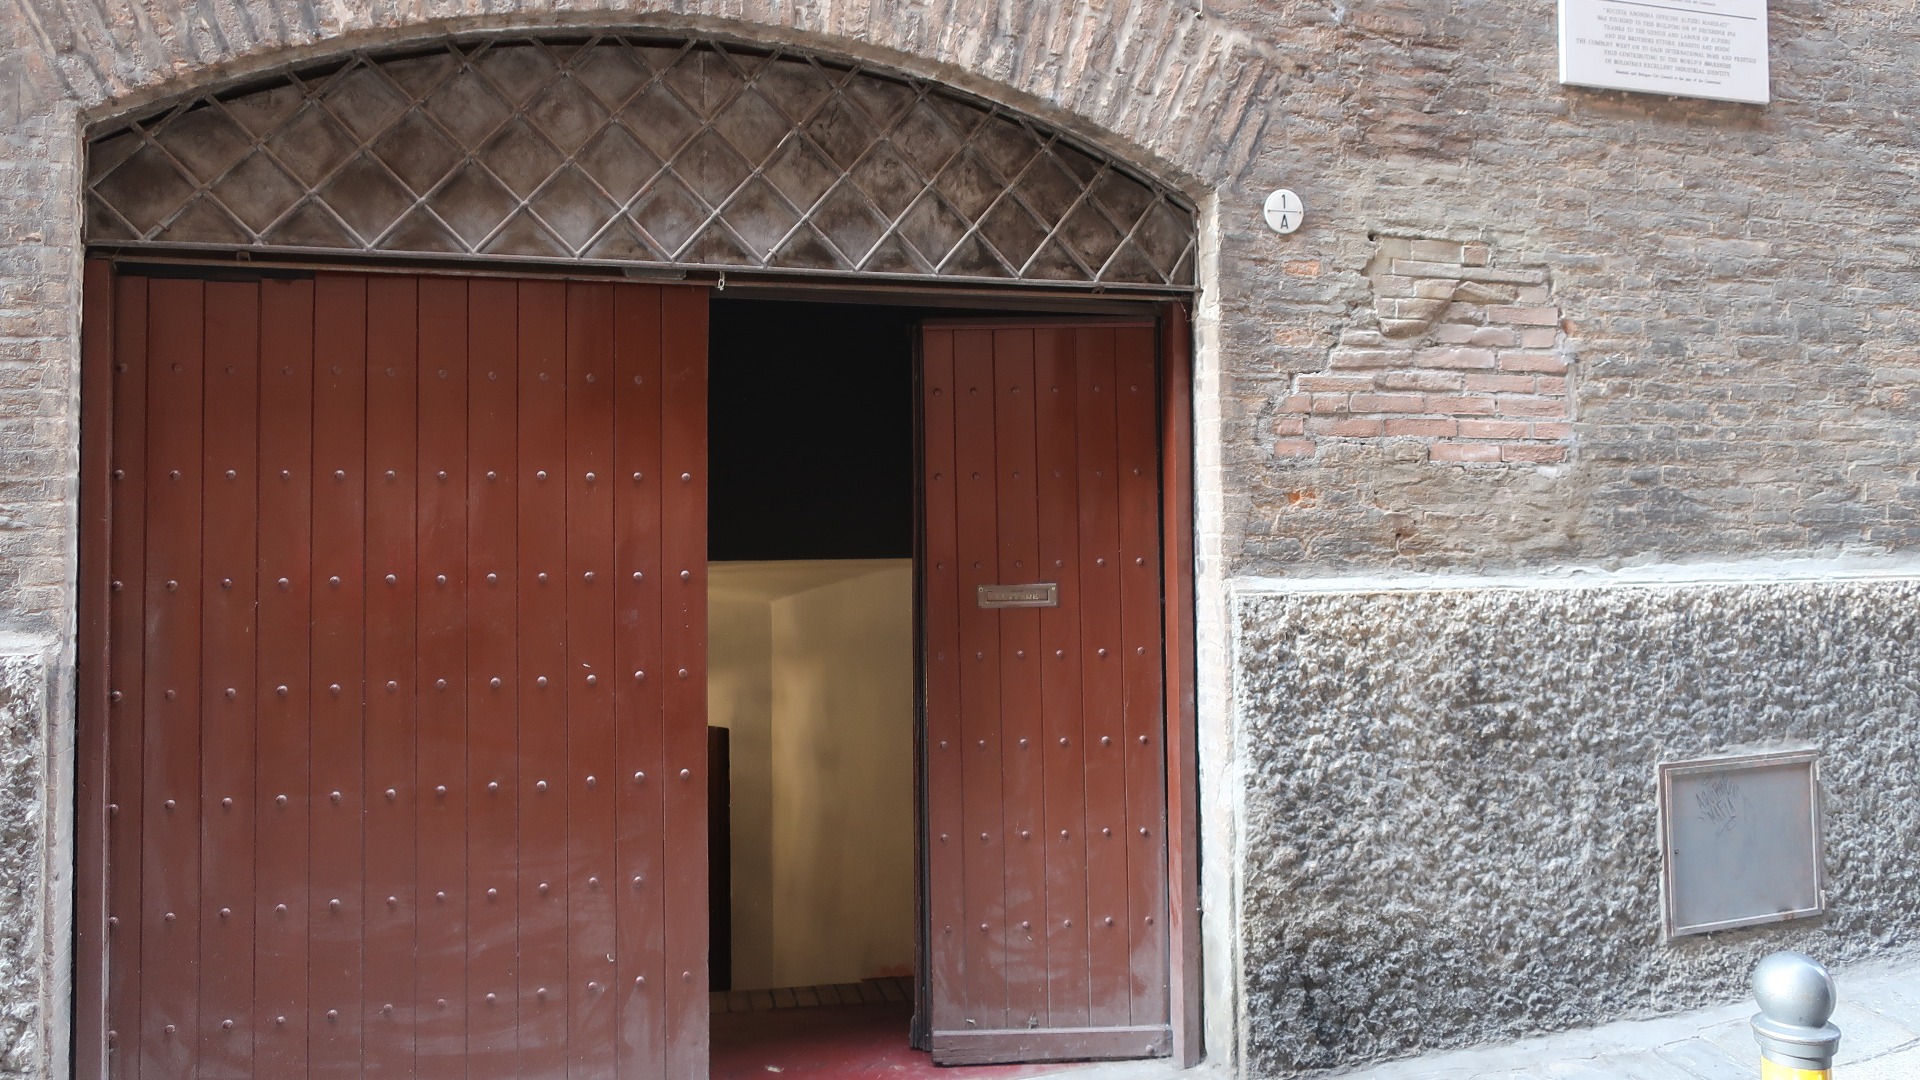 Lordens blogg: Historietabbe i Bologna: Maserati og bystyret valgte feil hus. 